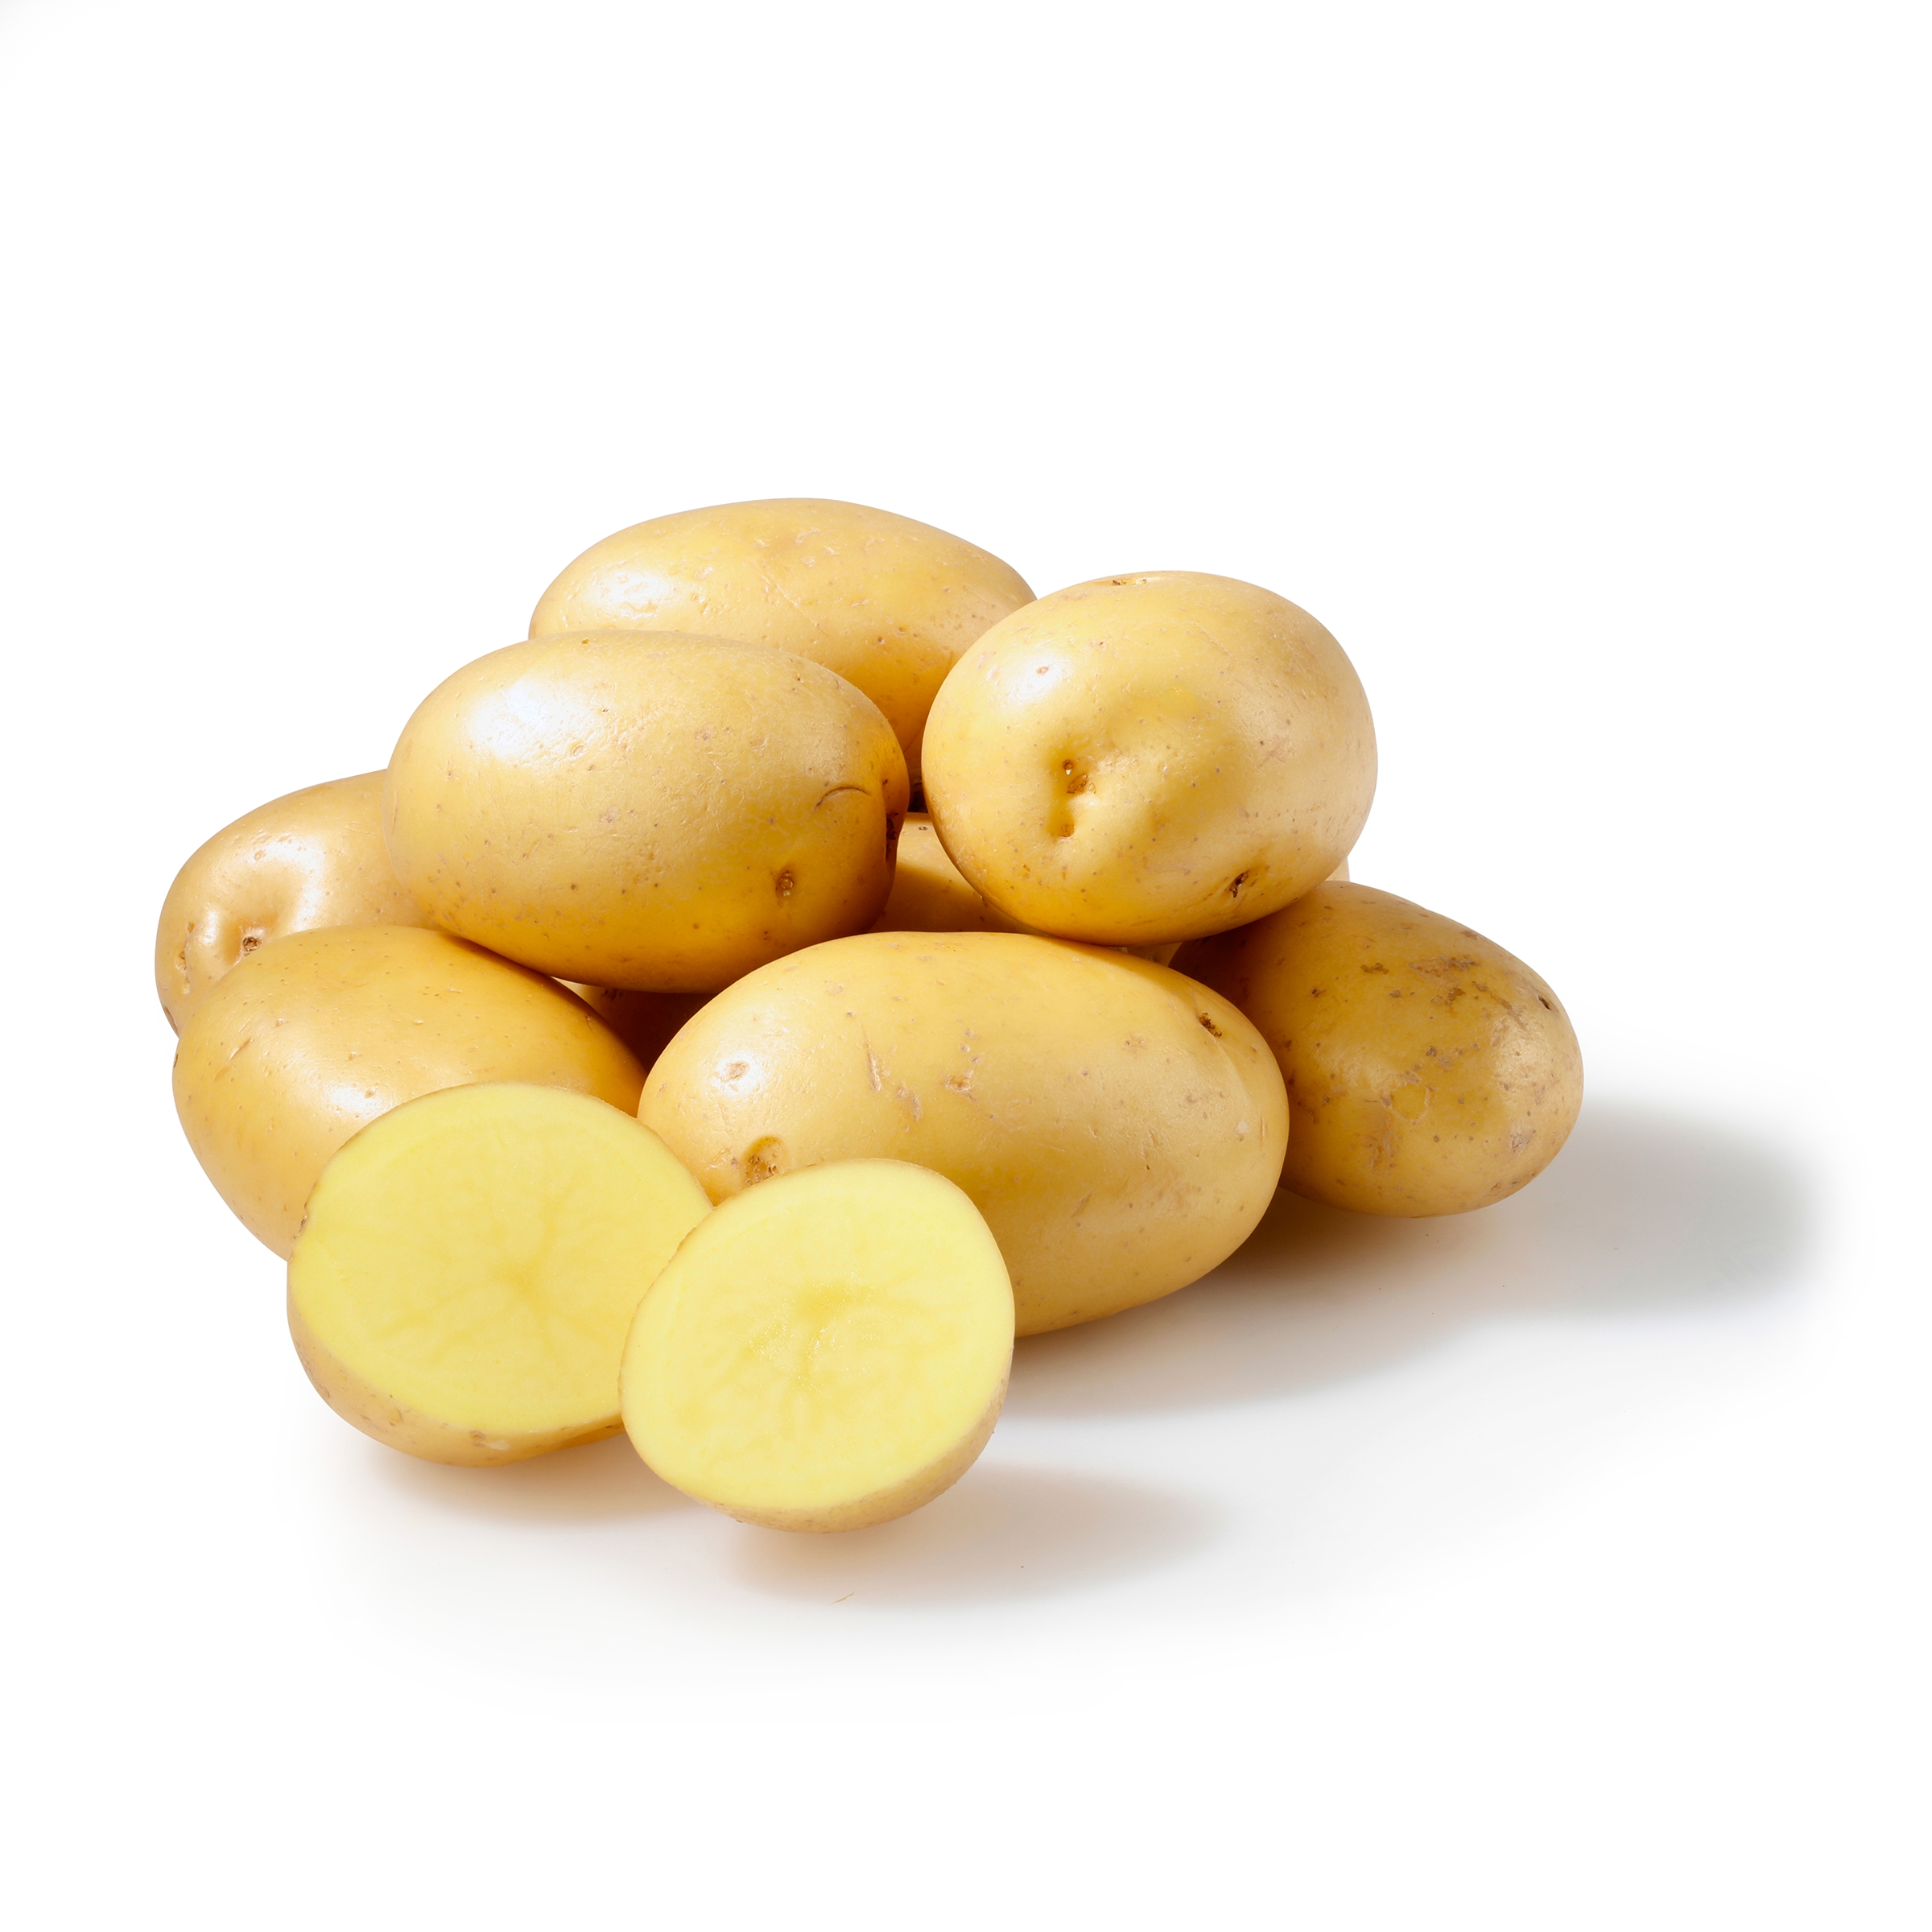 Marketside Fresh Organic Gold Potatoes, 3 lb Bag - image 3 of 5